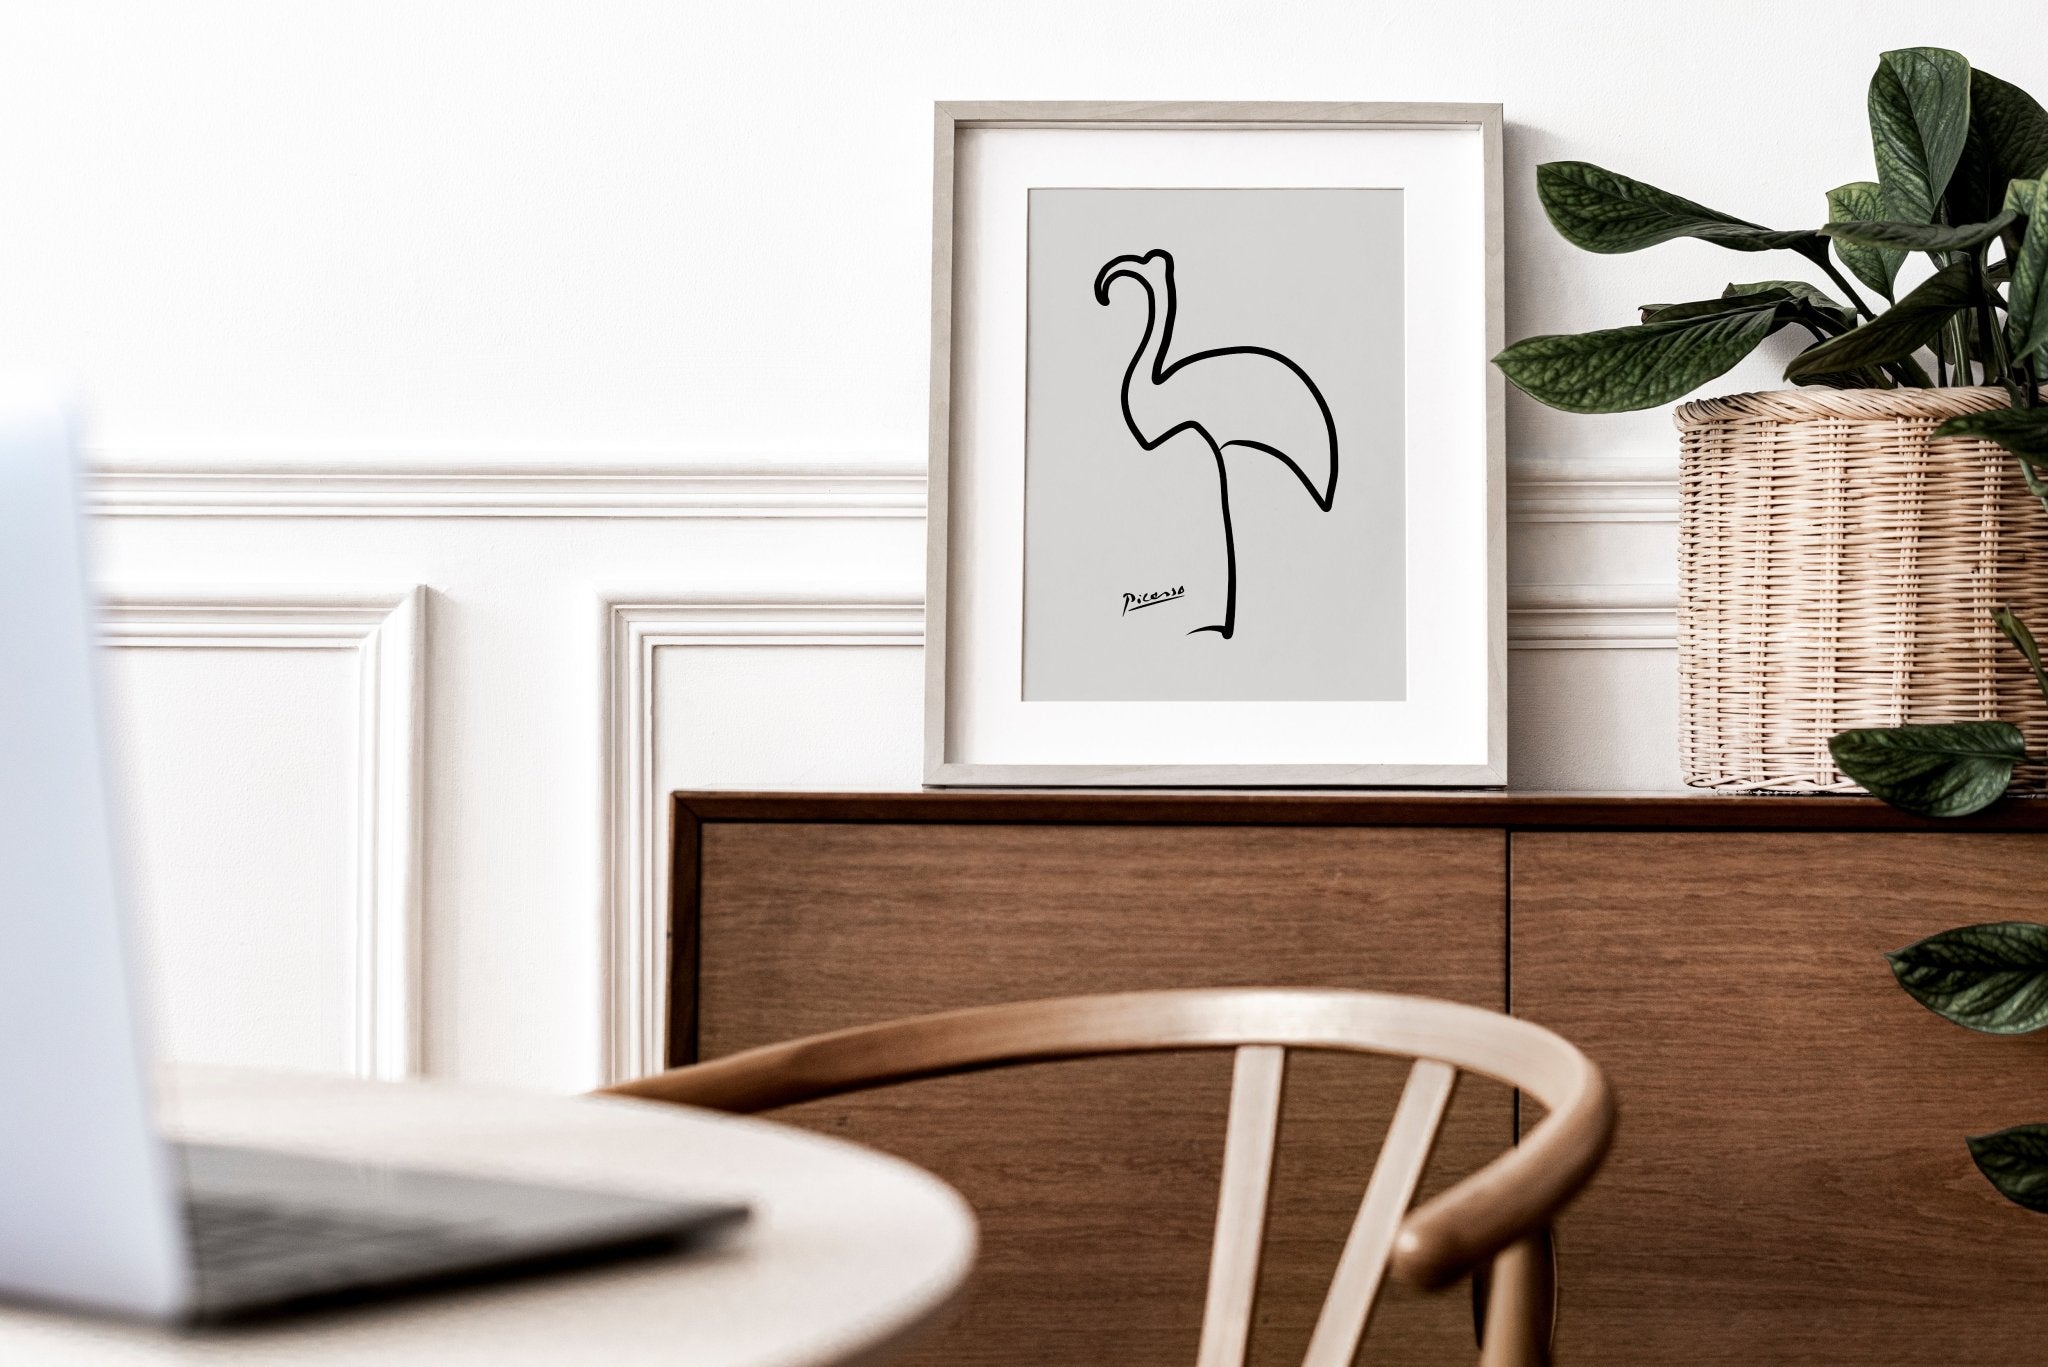 Pablo Picasso Flamingo Line Drawing